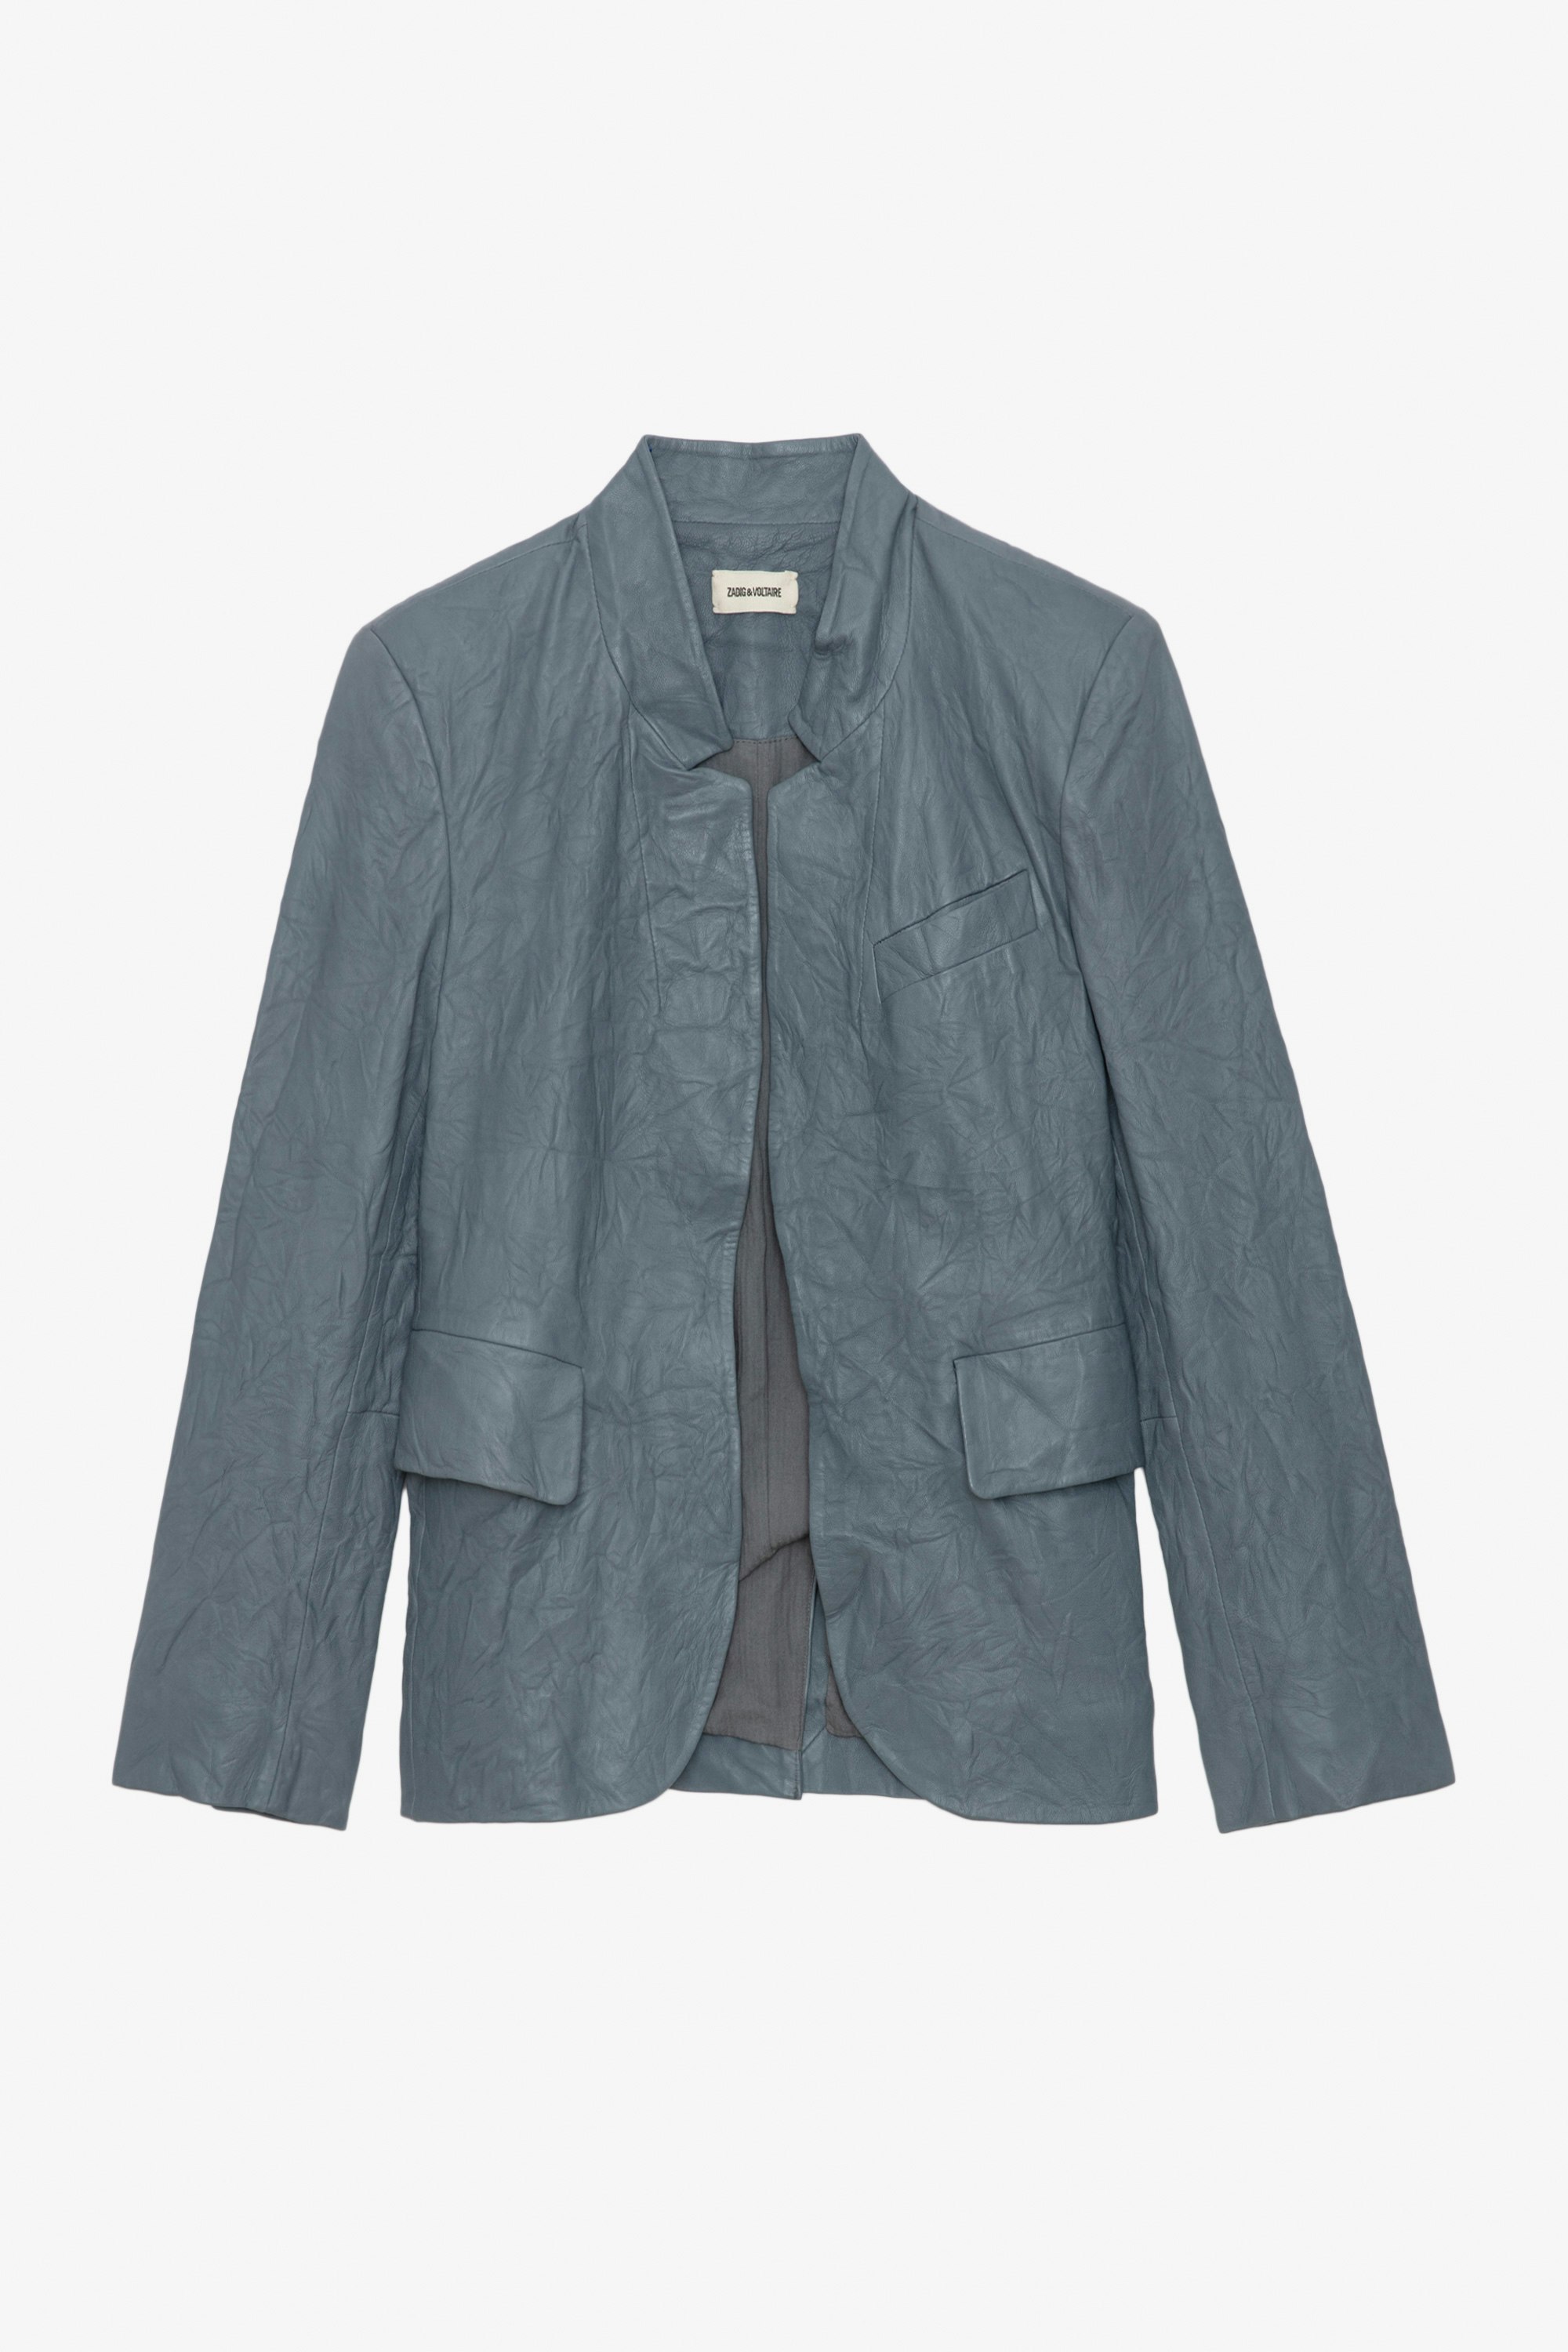 Verys Crinkled Leather Blazer - Women’s light blue crinkled leather blazer with 3/4-length sleeves.